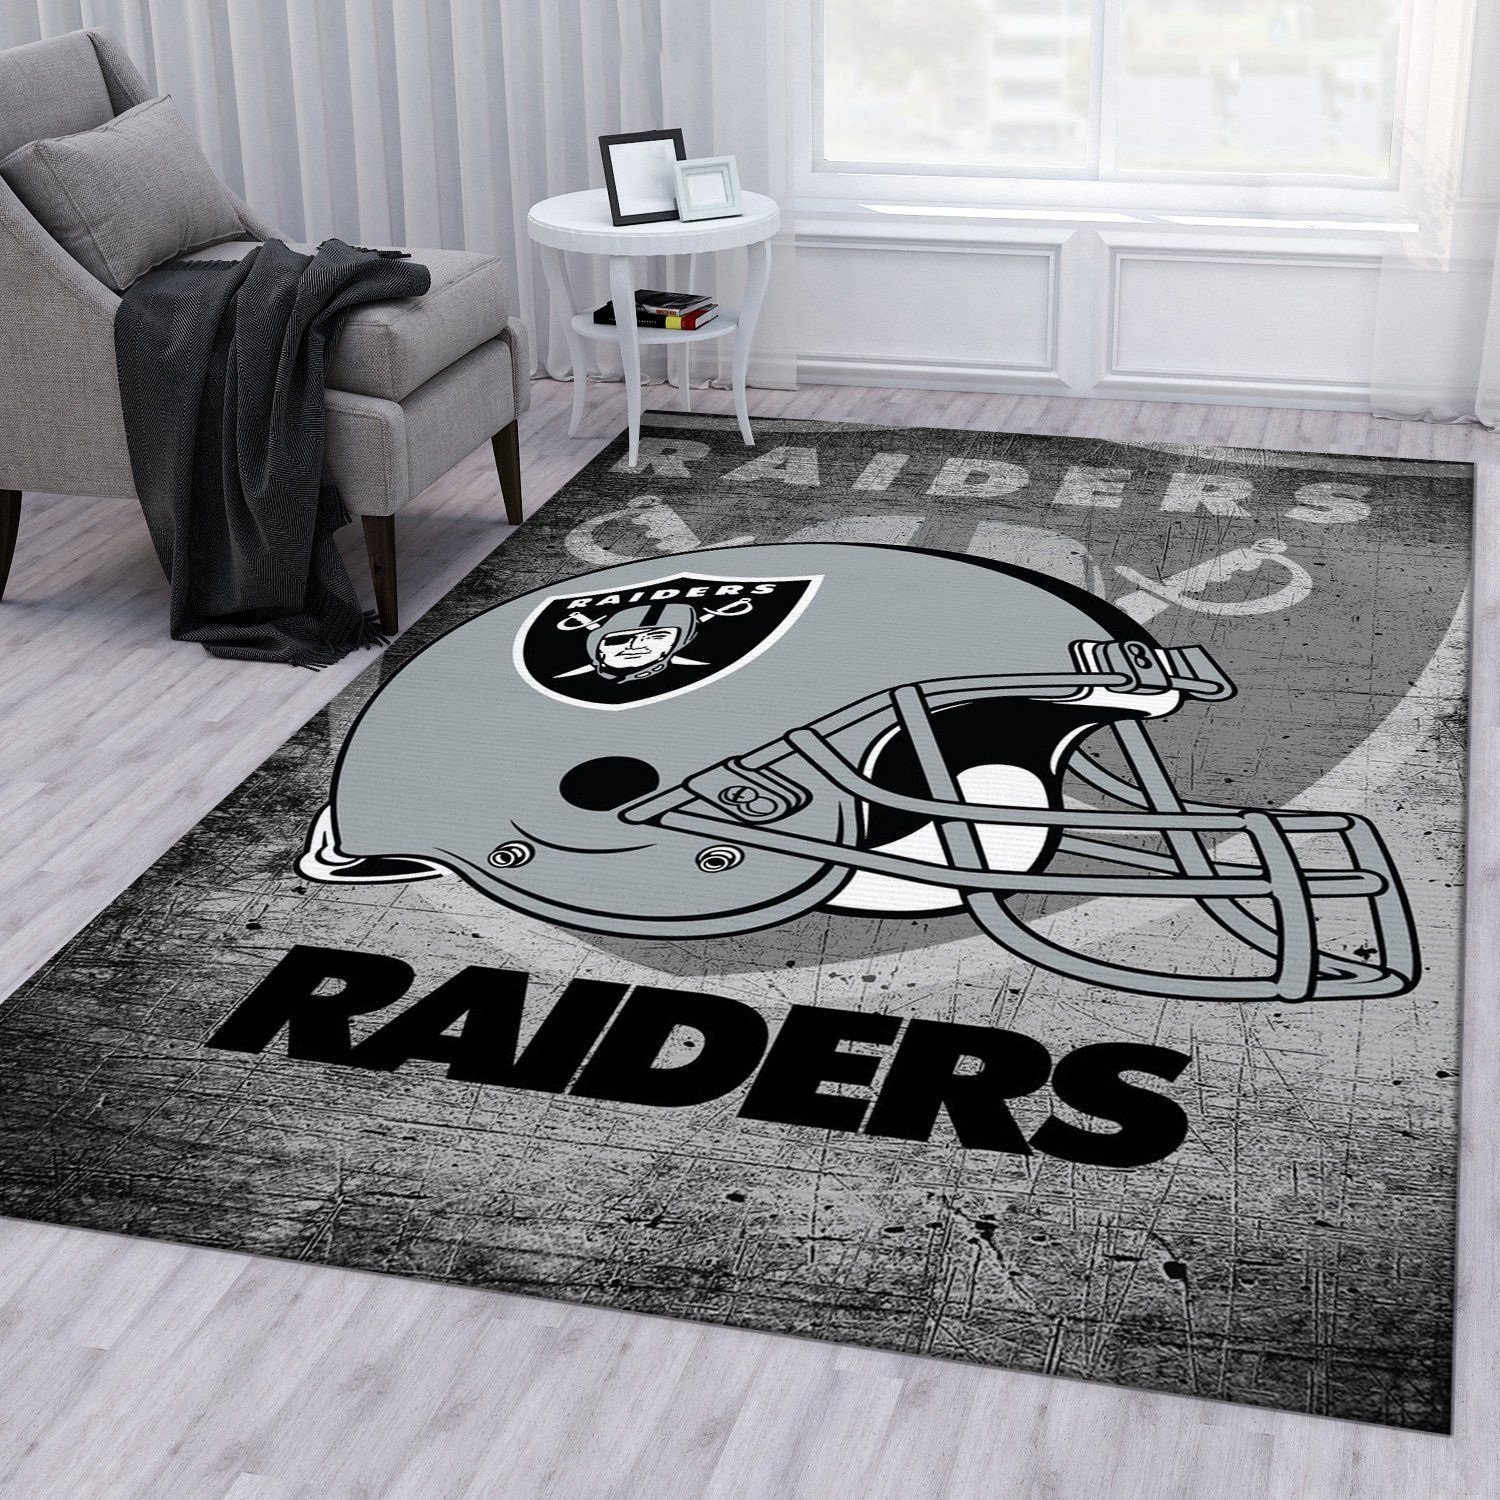 Los Angeles Raiders Helmet Nfl Football Team Area Rug For Gift Bedroom Rug US Gift Decor - Indoor Outdoor Rugs 1